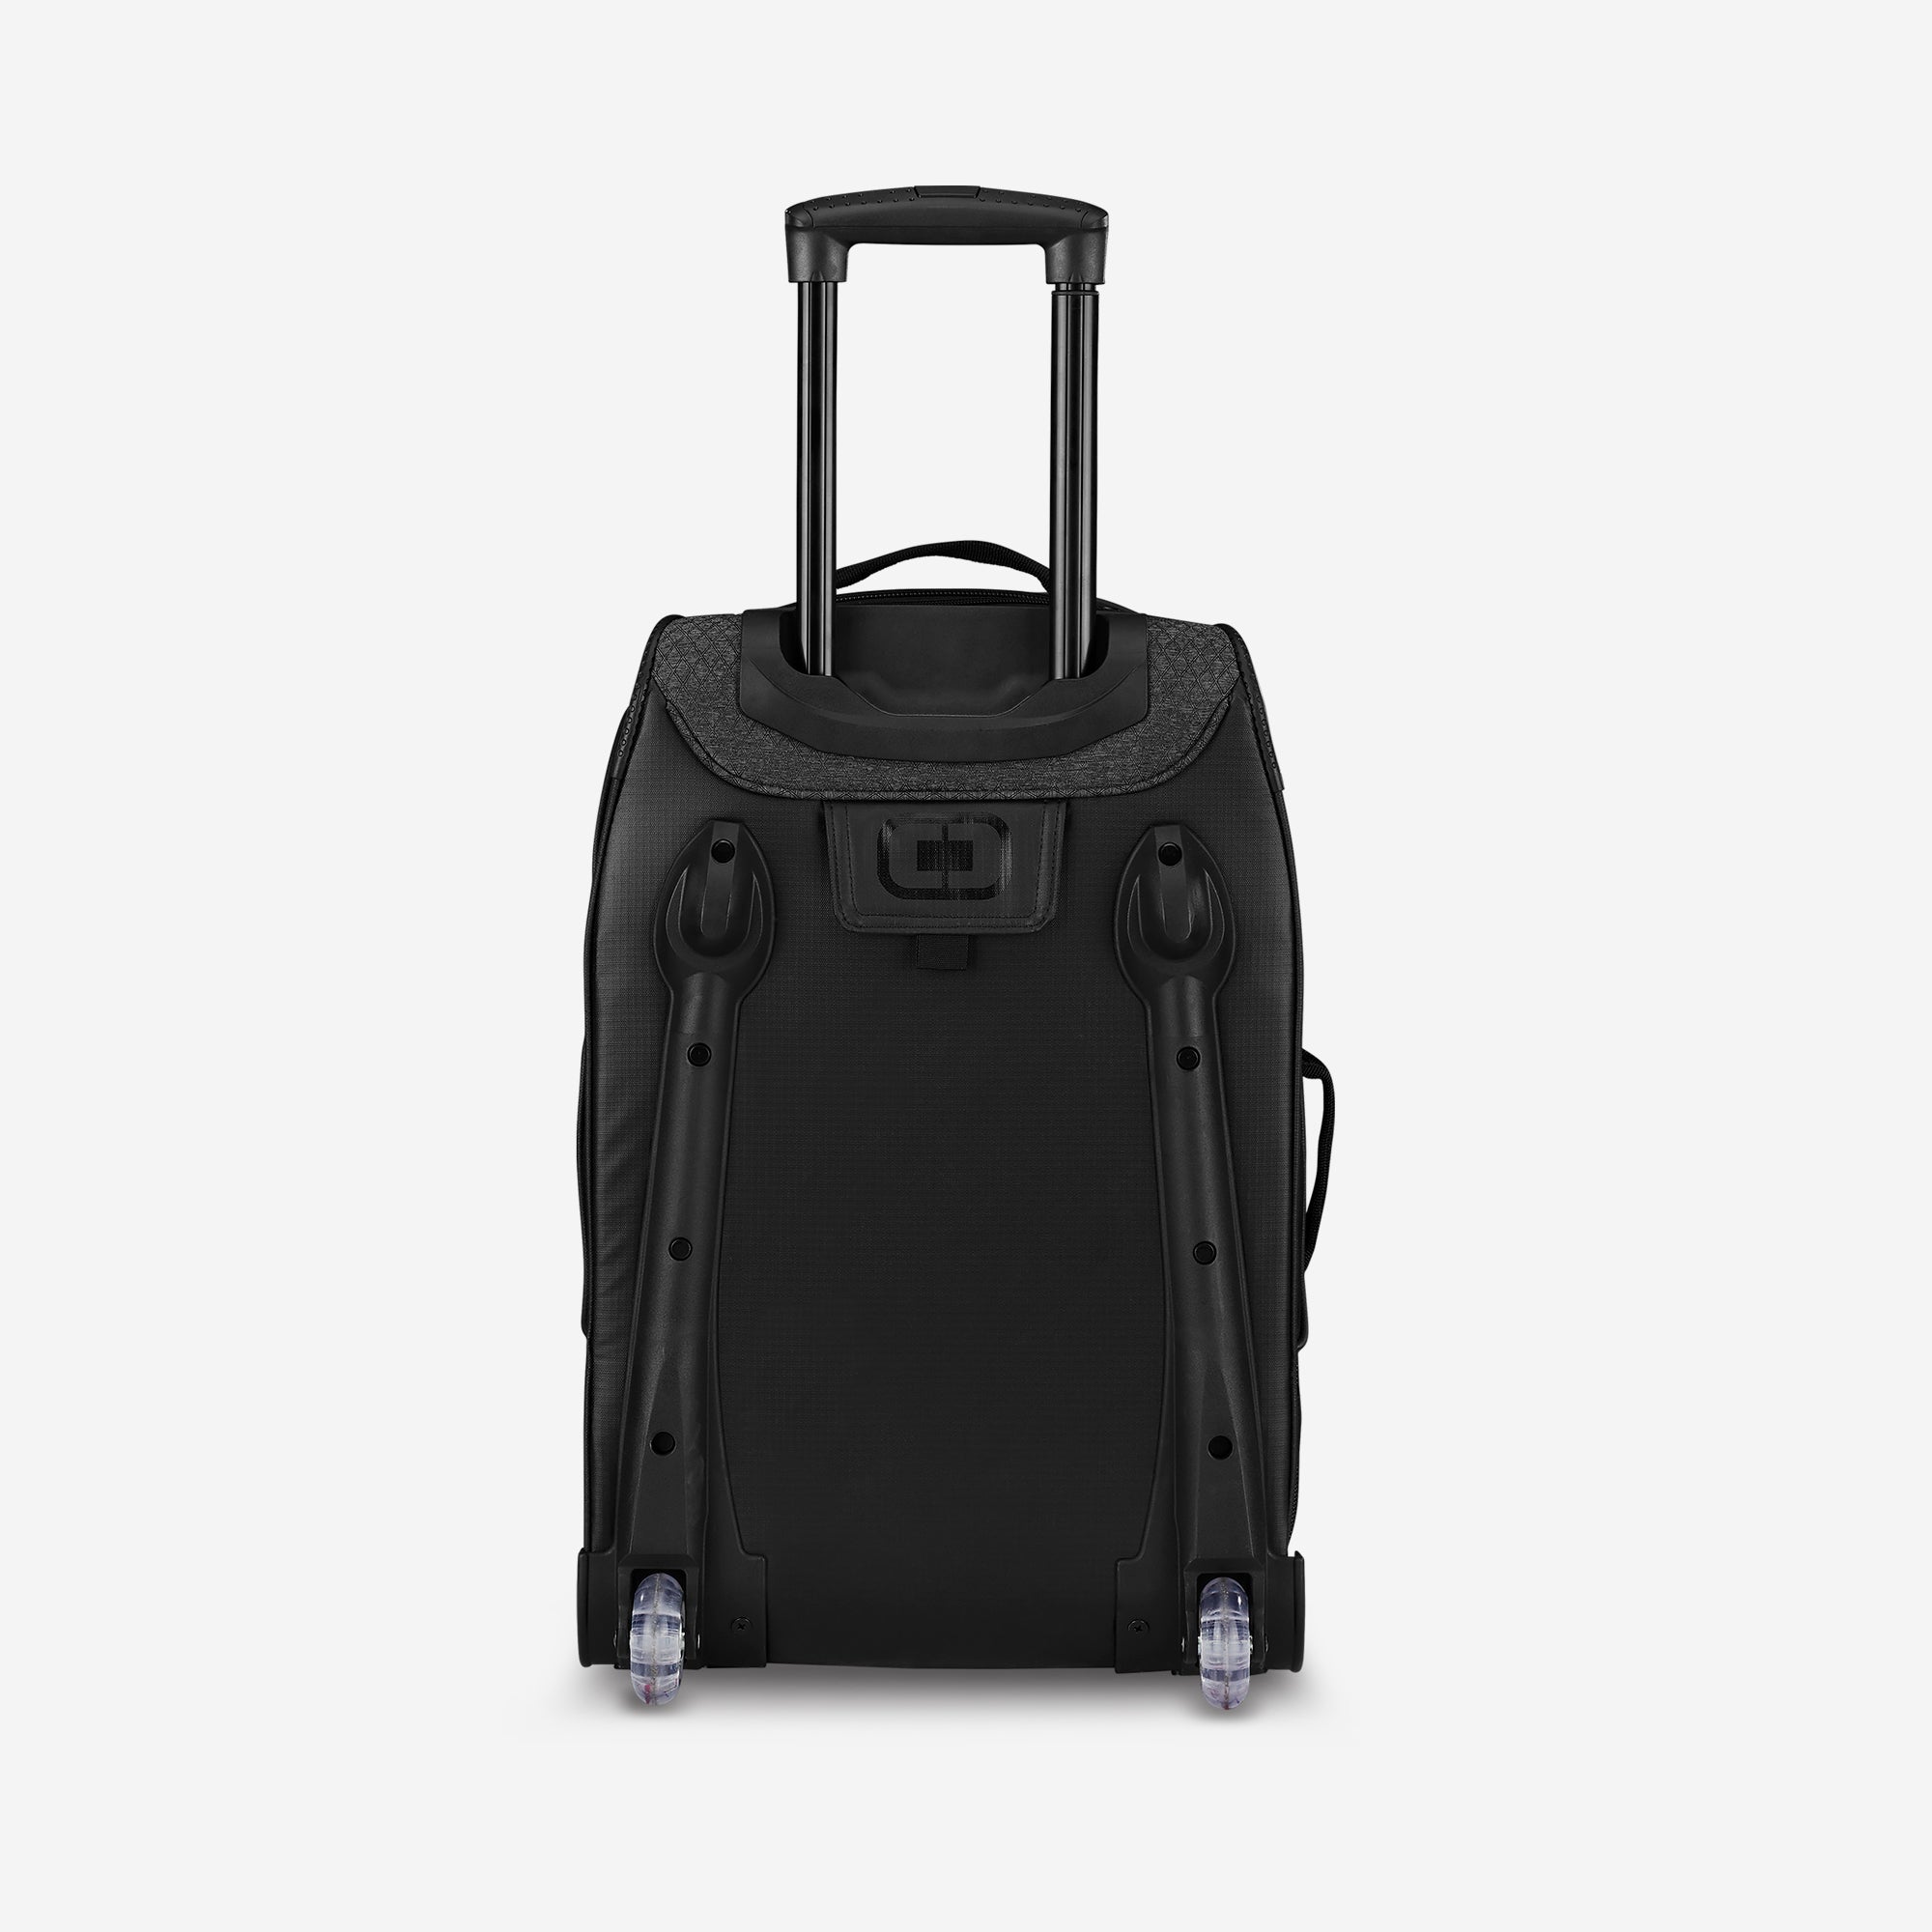 Purple Travel Luggage Bag at Best Price in Kolkata | Uni Style Corporation